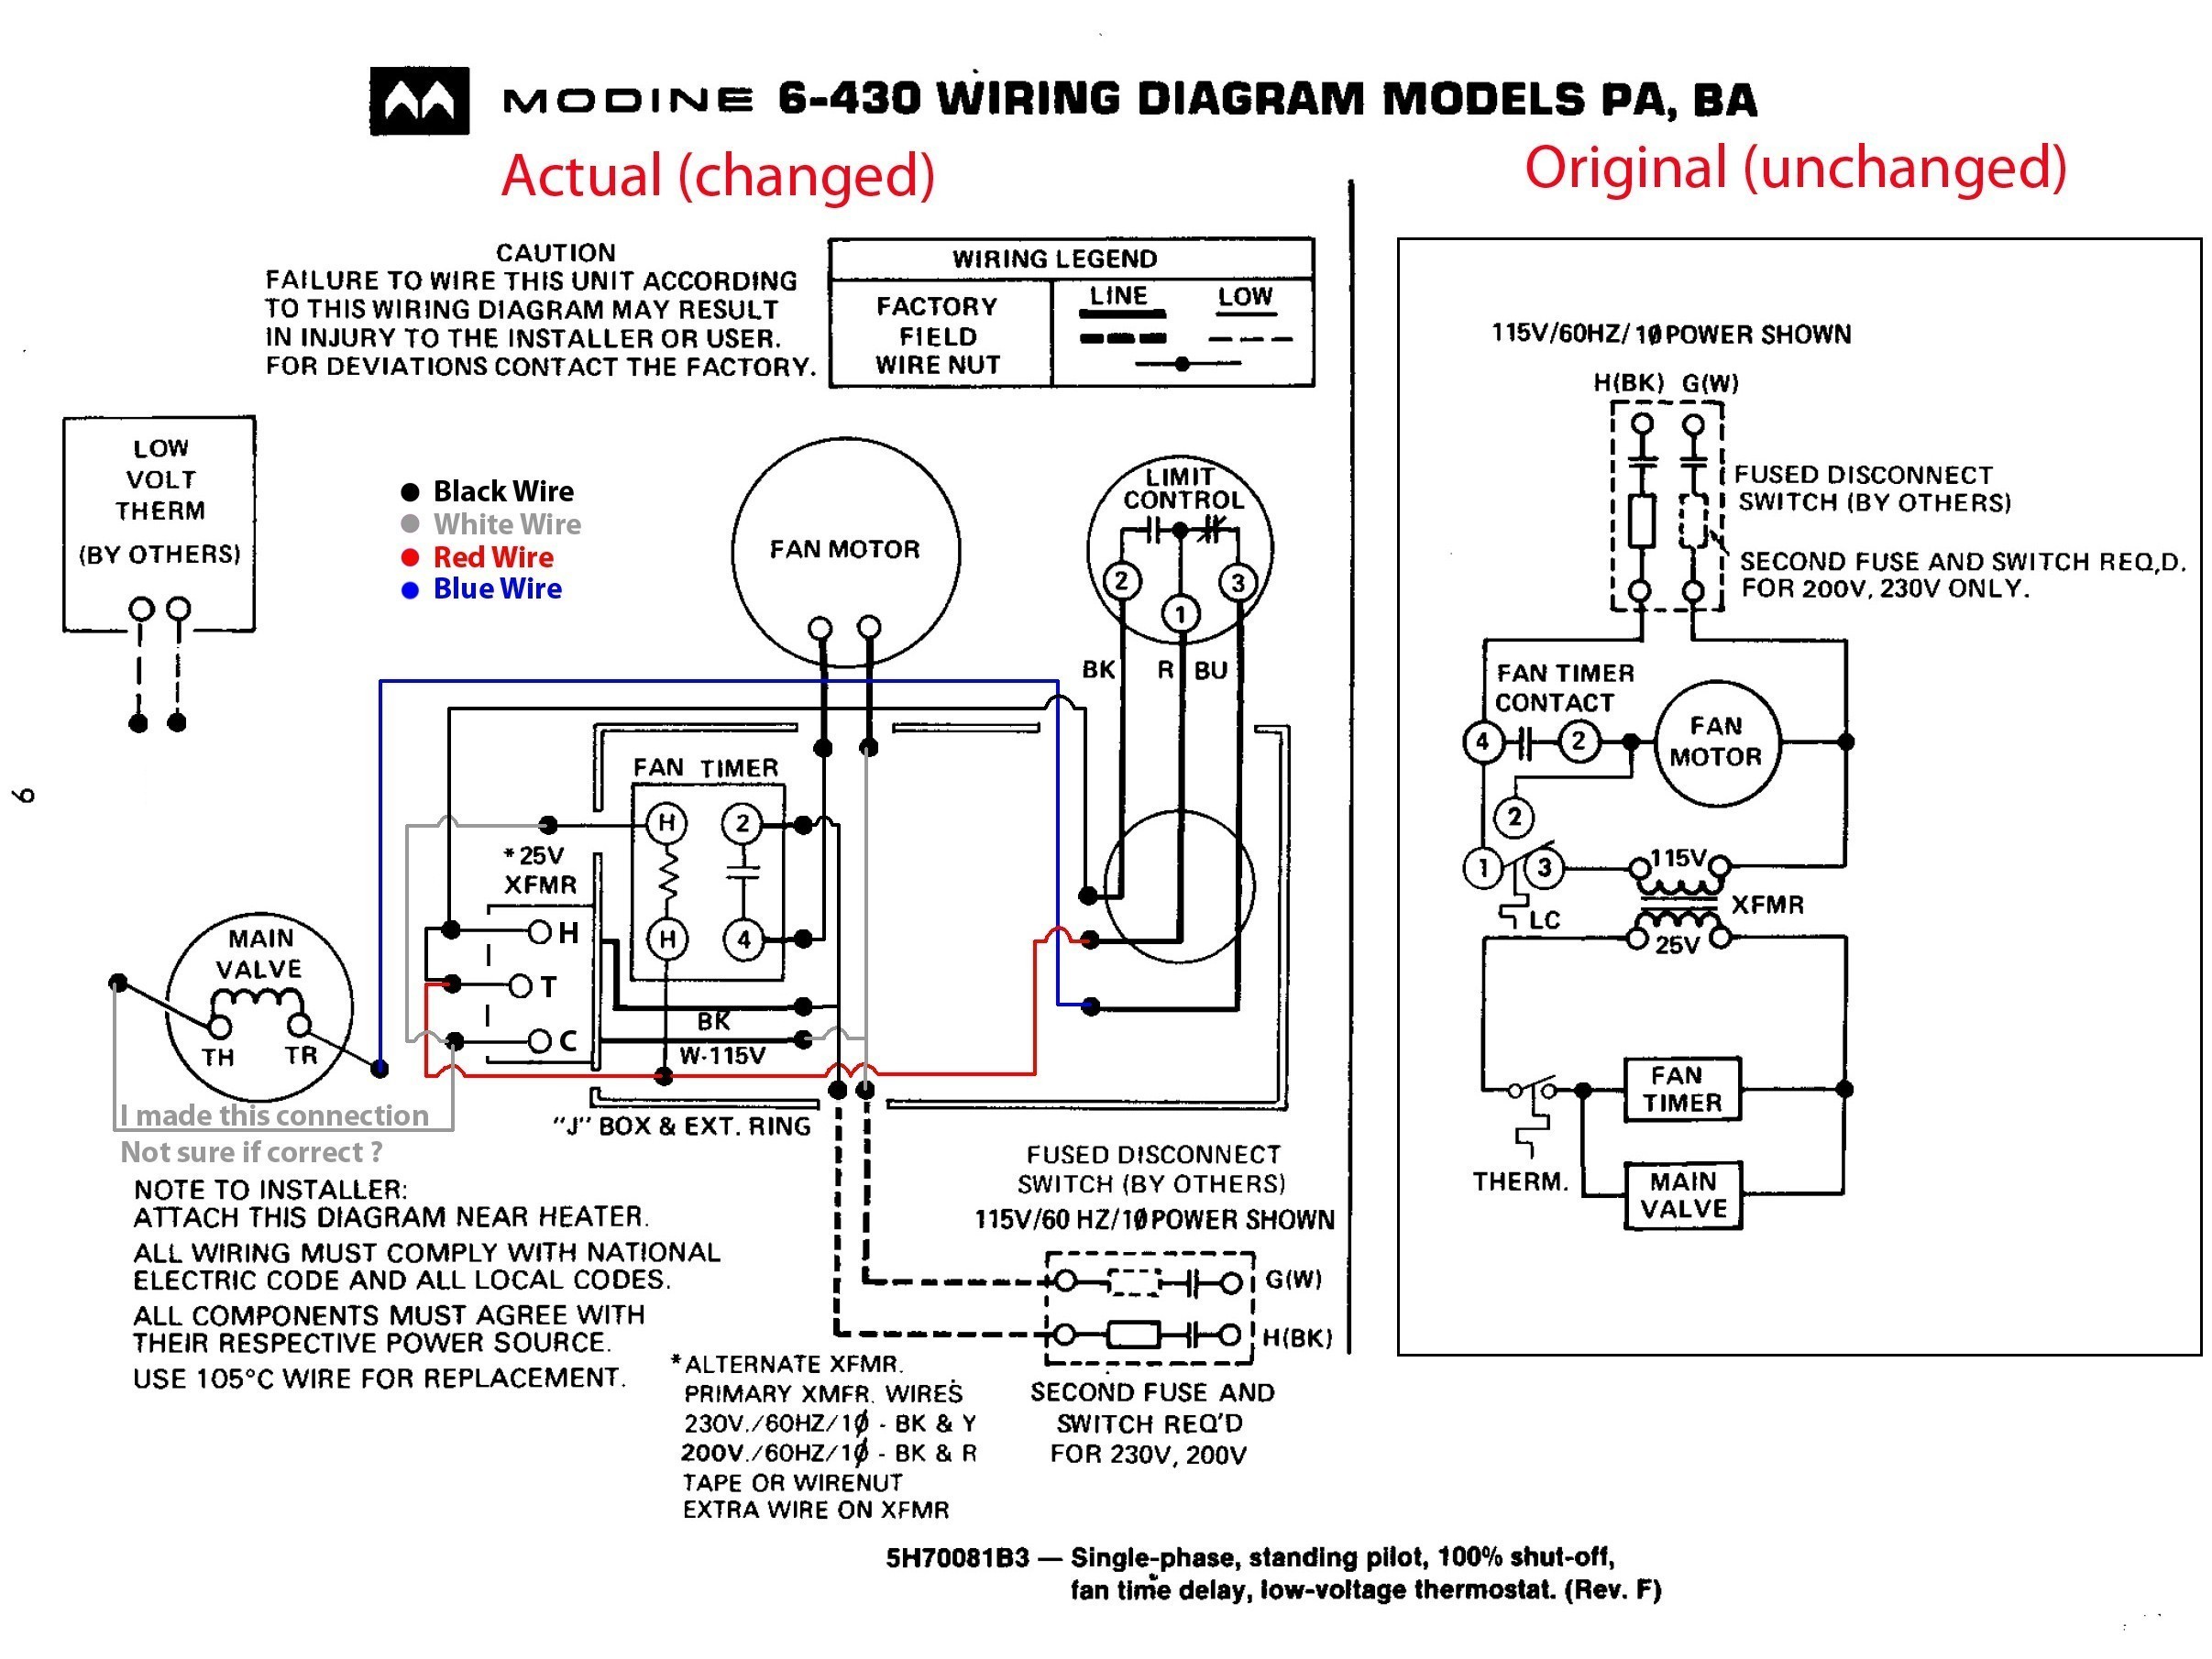 Mars Motor Wiring Diagram from mainetreasurechest.com